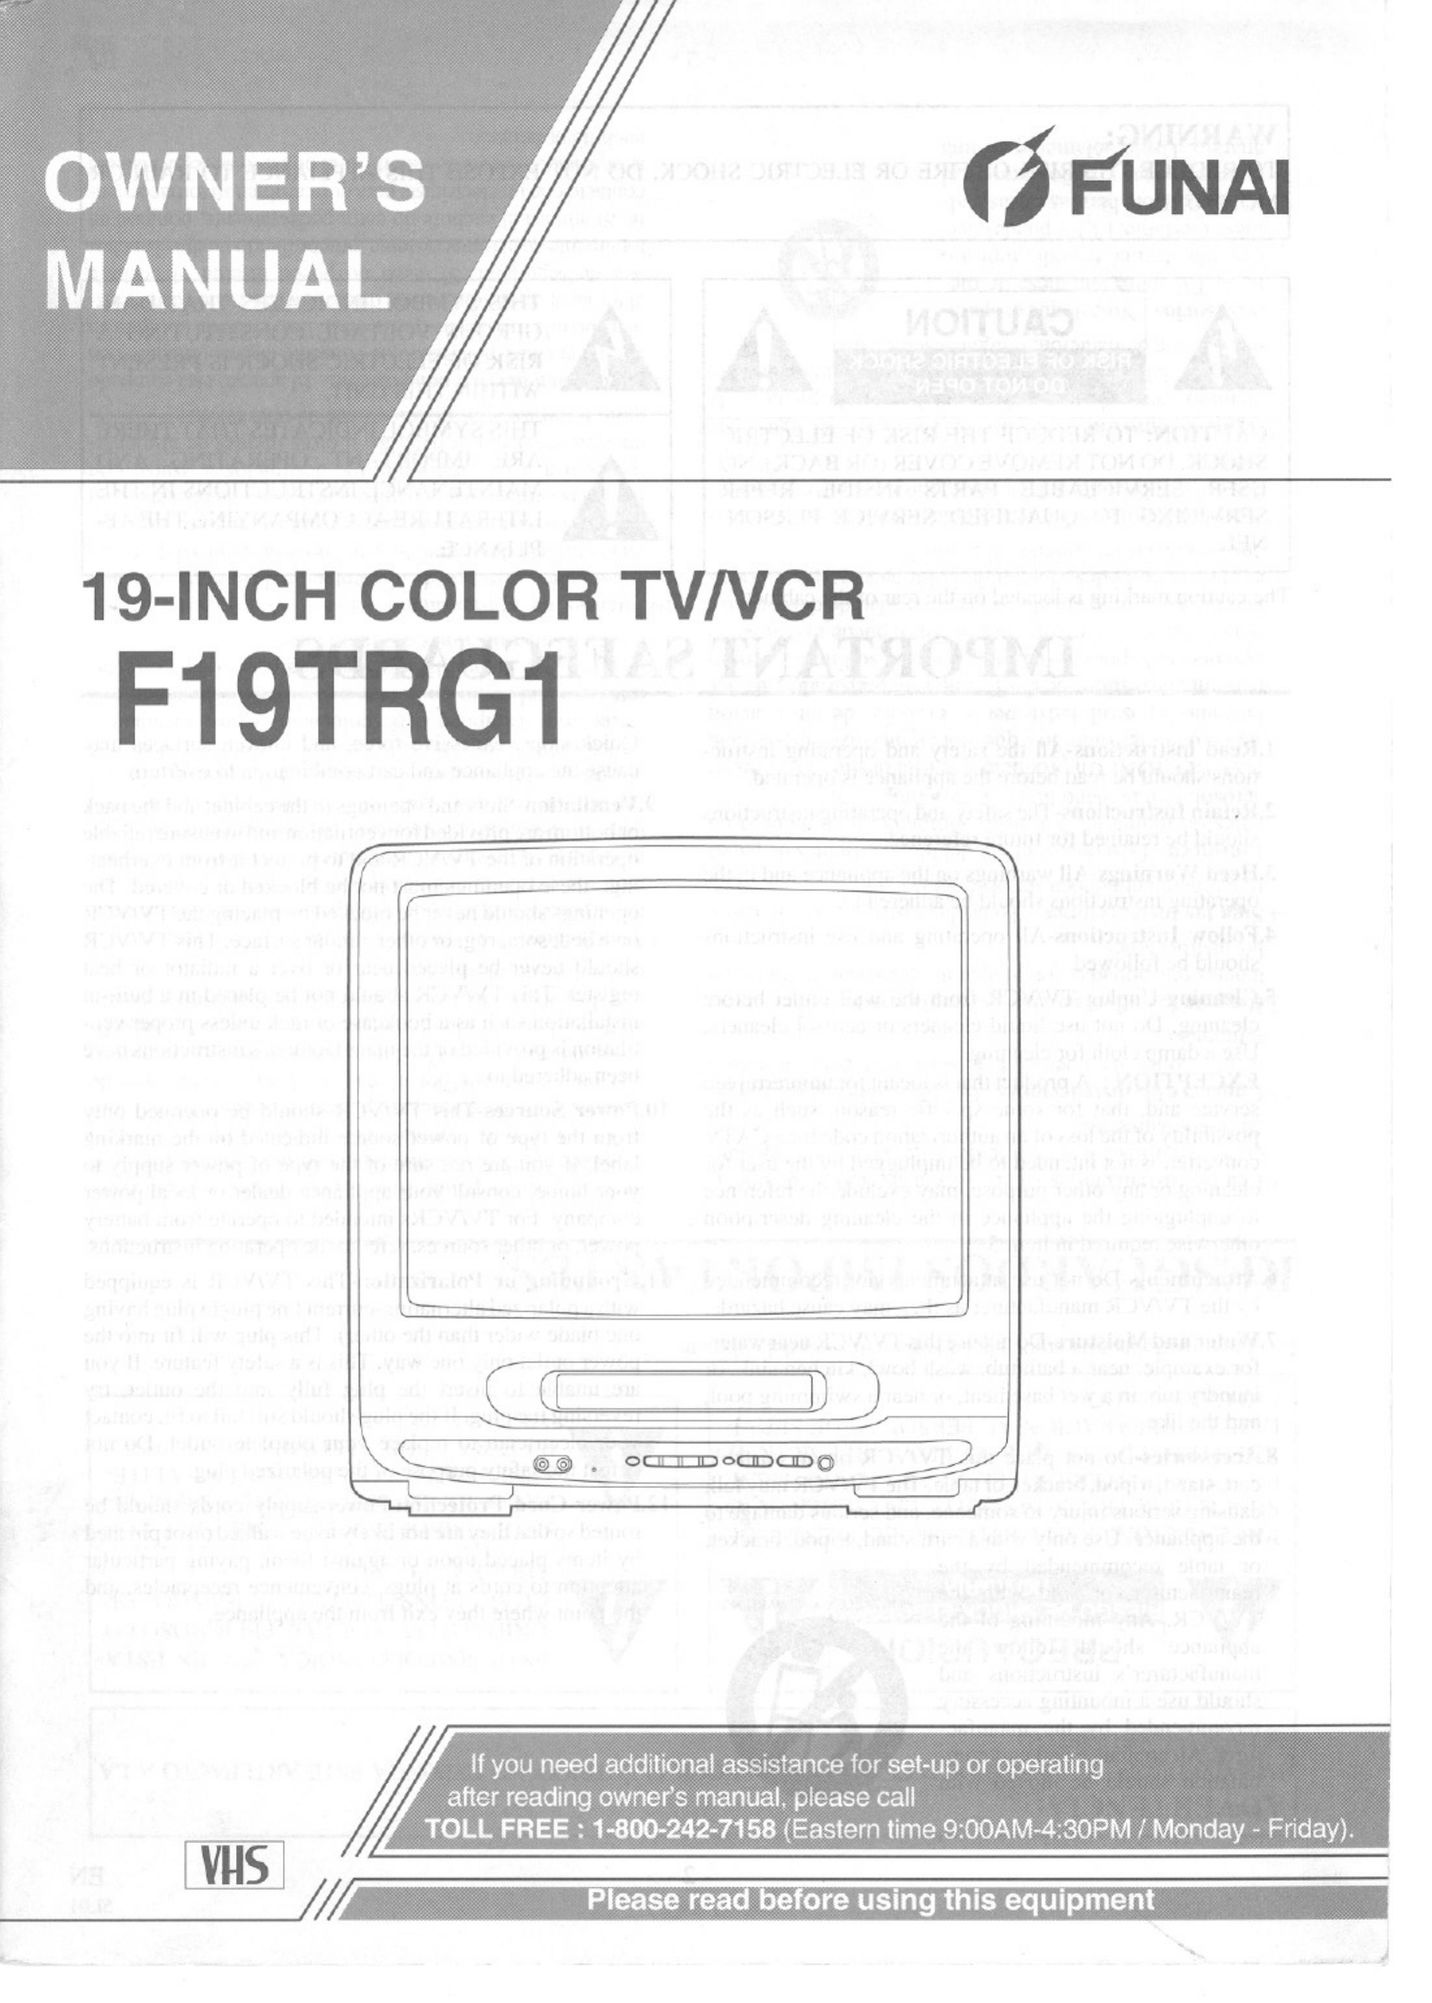 FUNAI F19TRG1 TV VCR Combo User Manual